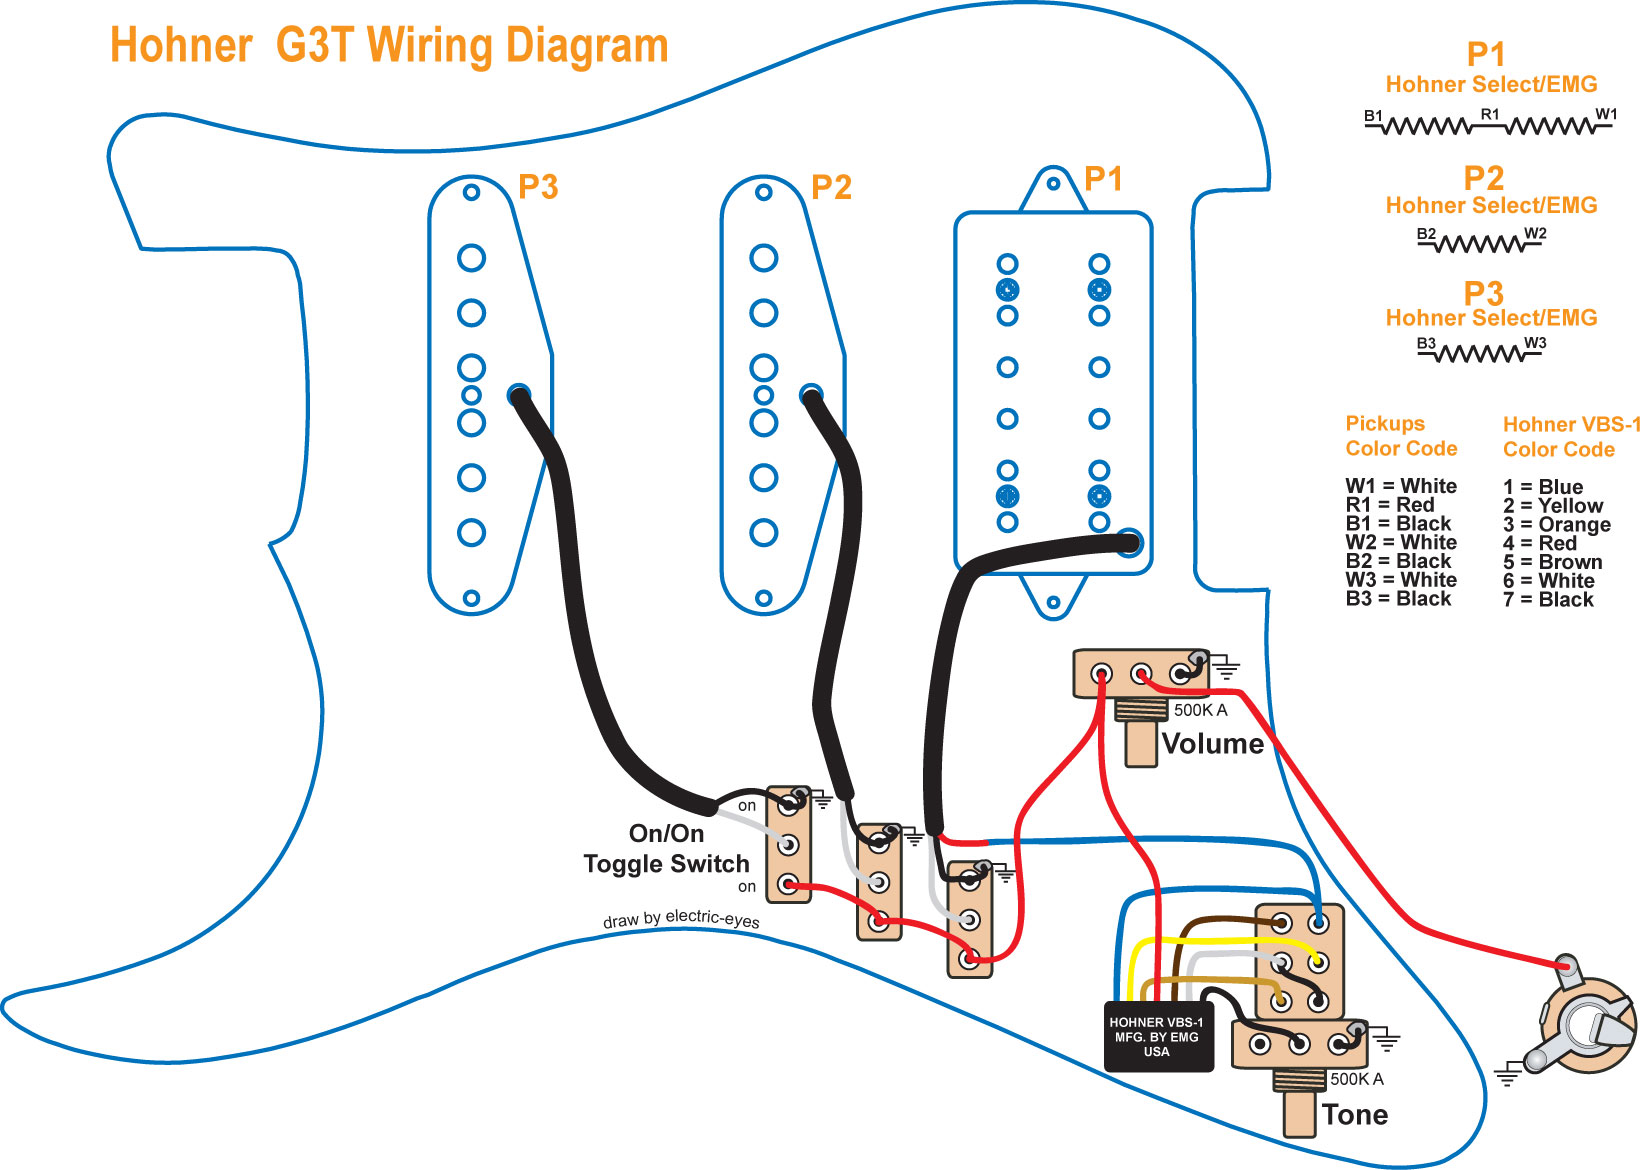 Hohner_G3T_Wiring_Diagram.jpg